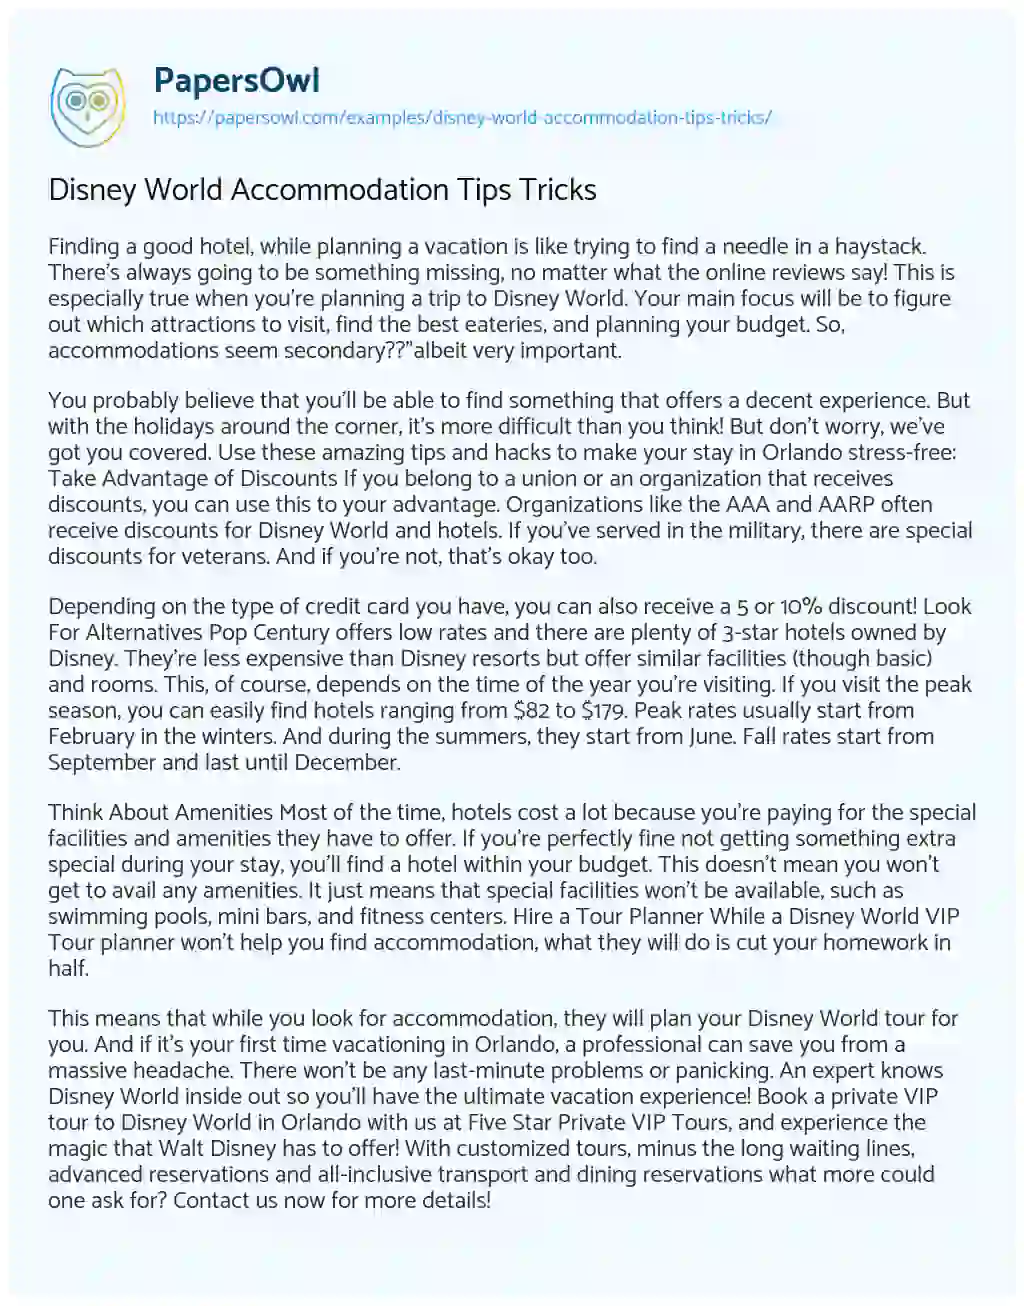 Essay on Disney World Accommodation Tips Tricks